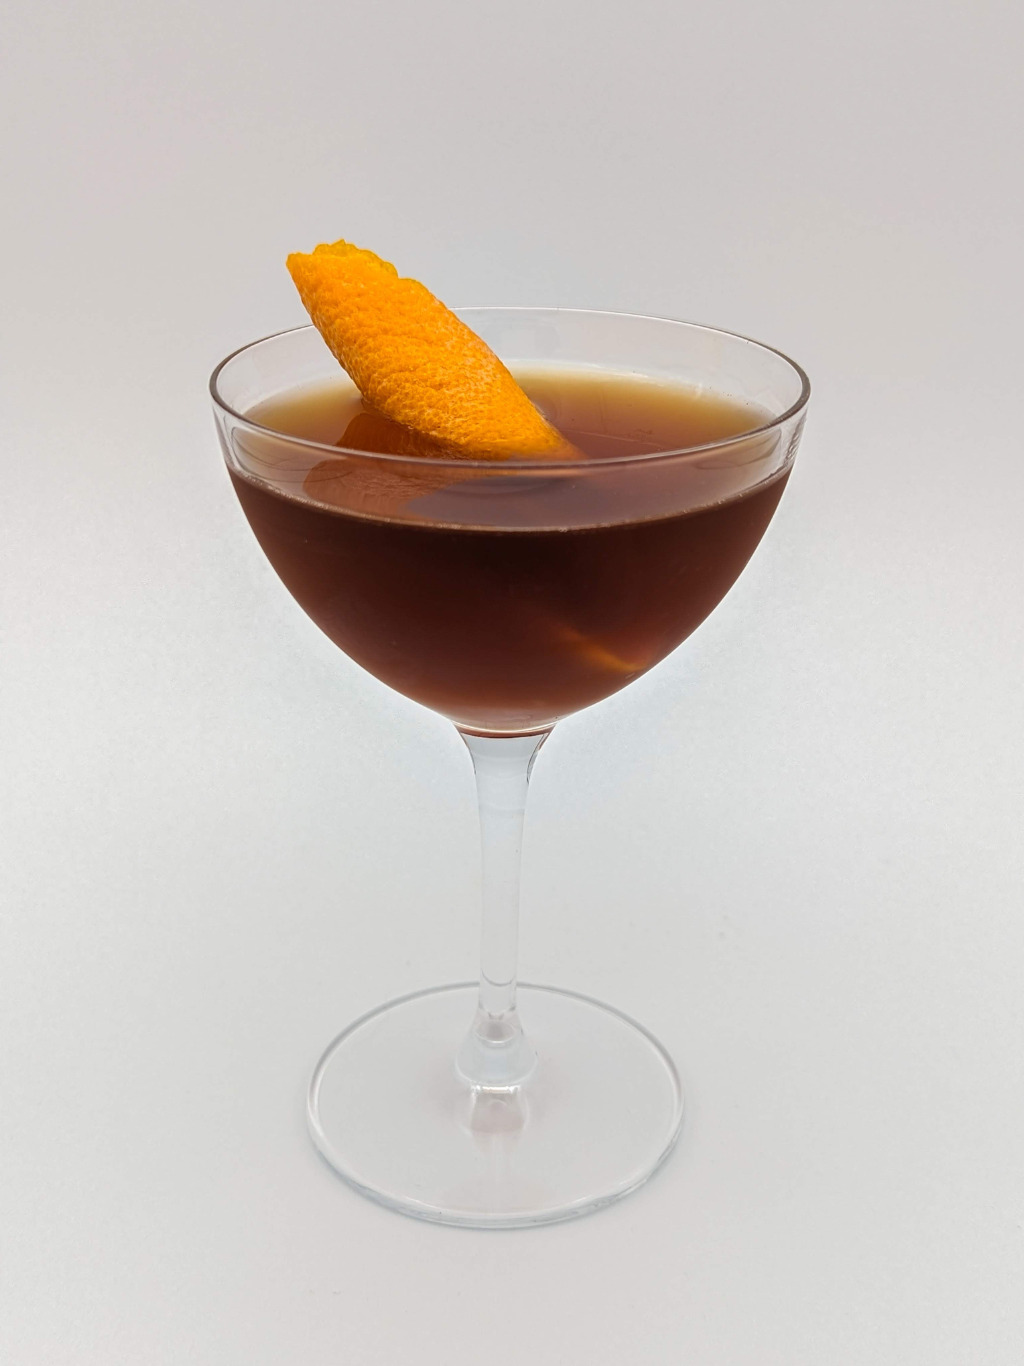 orange brown liquid in a coupe with an orange peel garnish